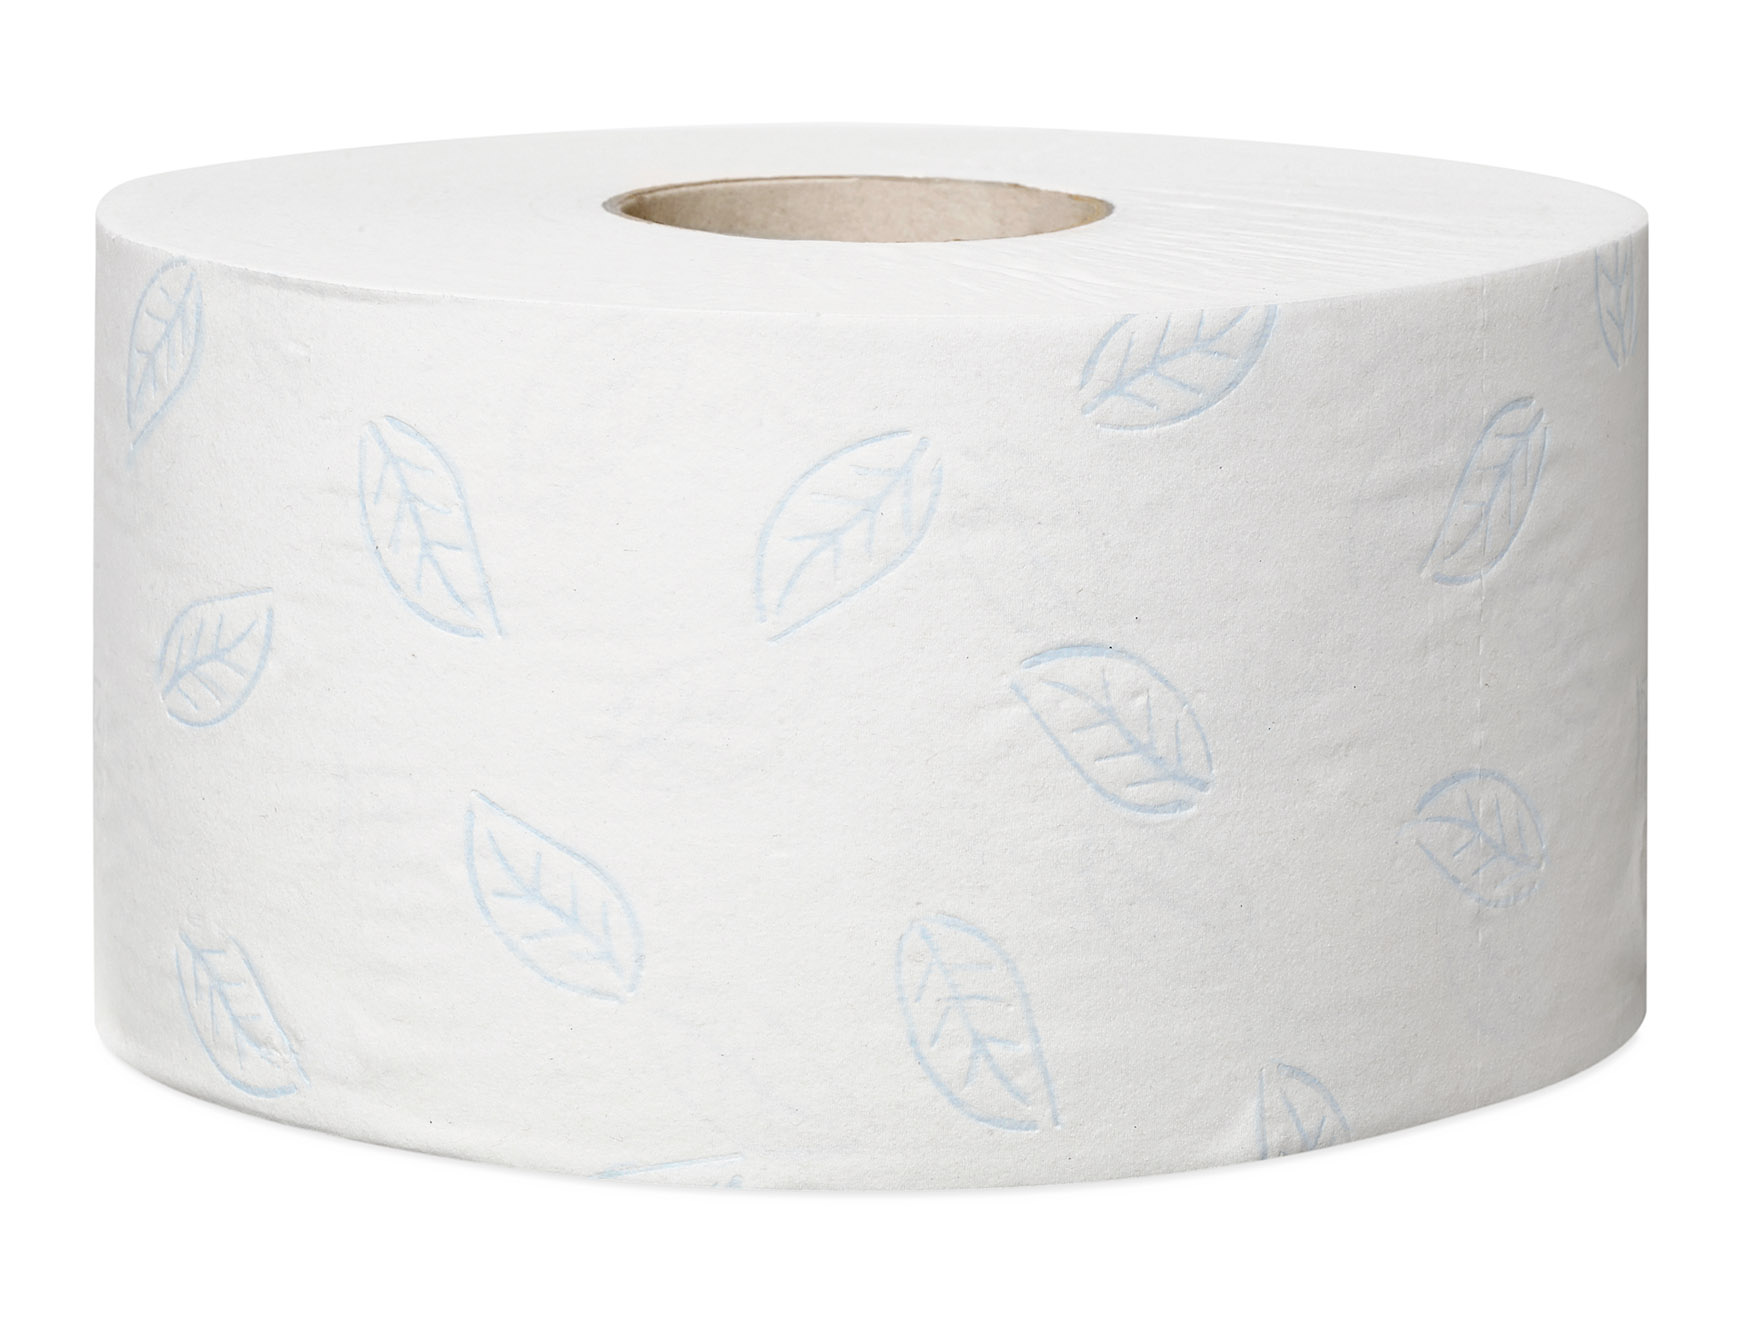 Premium papier toilette mini jumbo roll soft T2 - 2-plis - 10 cm x 170 m - 12 roul.